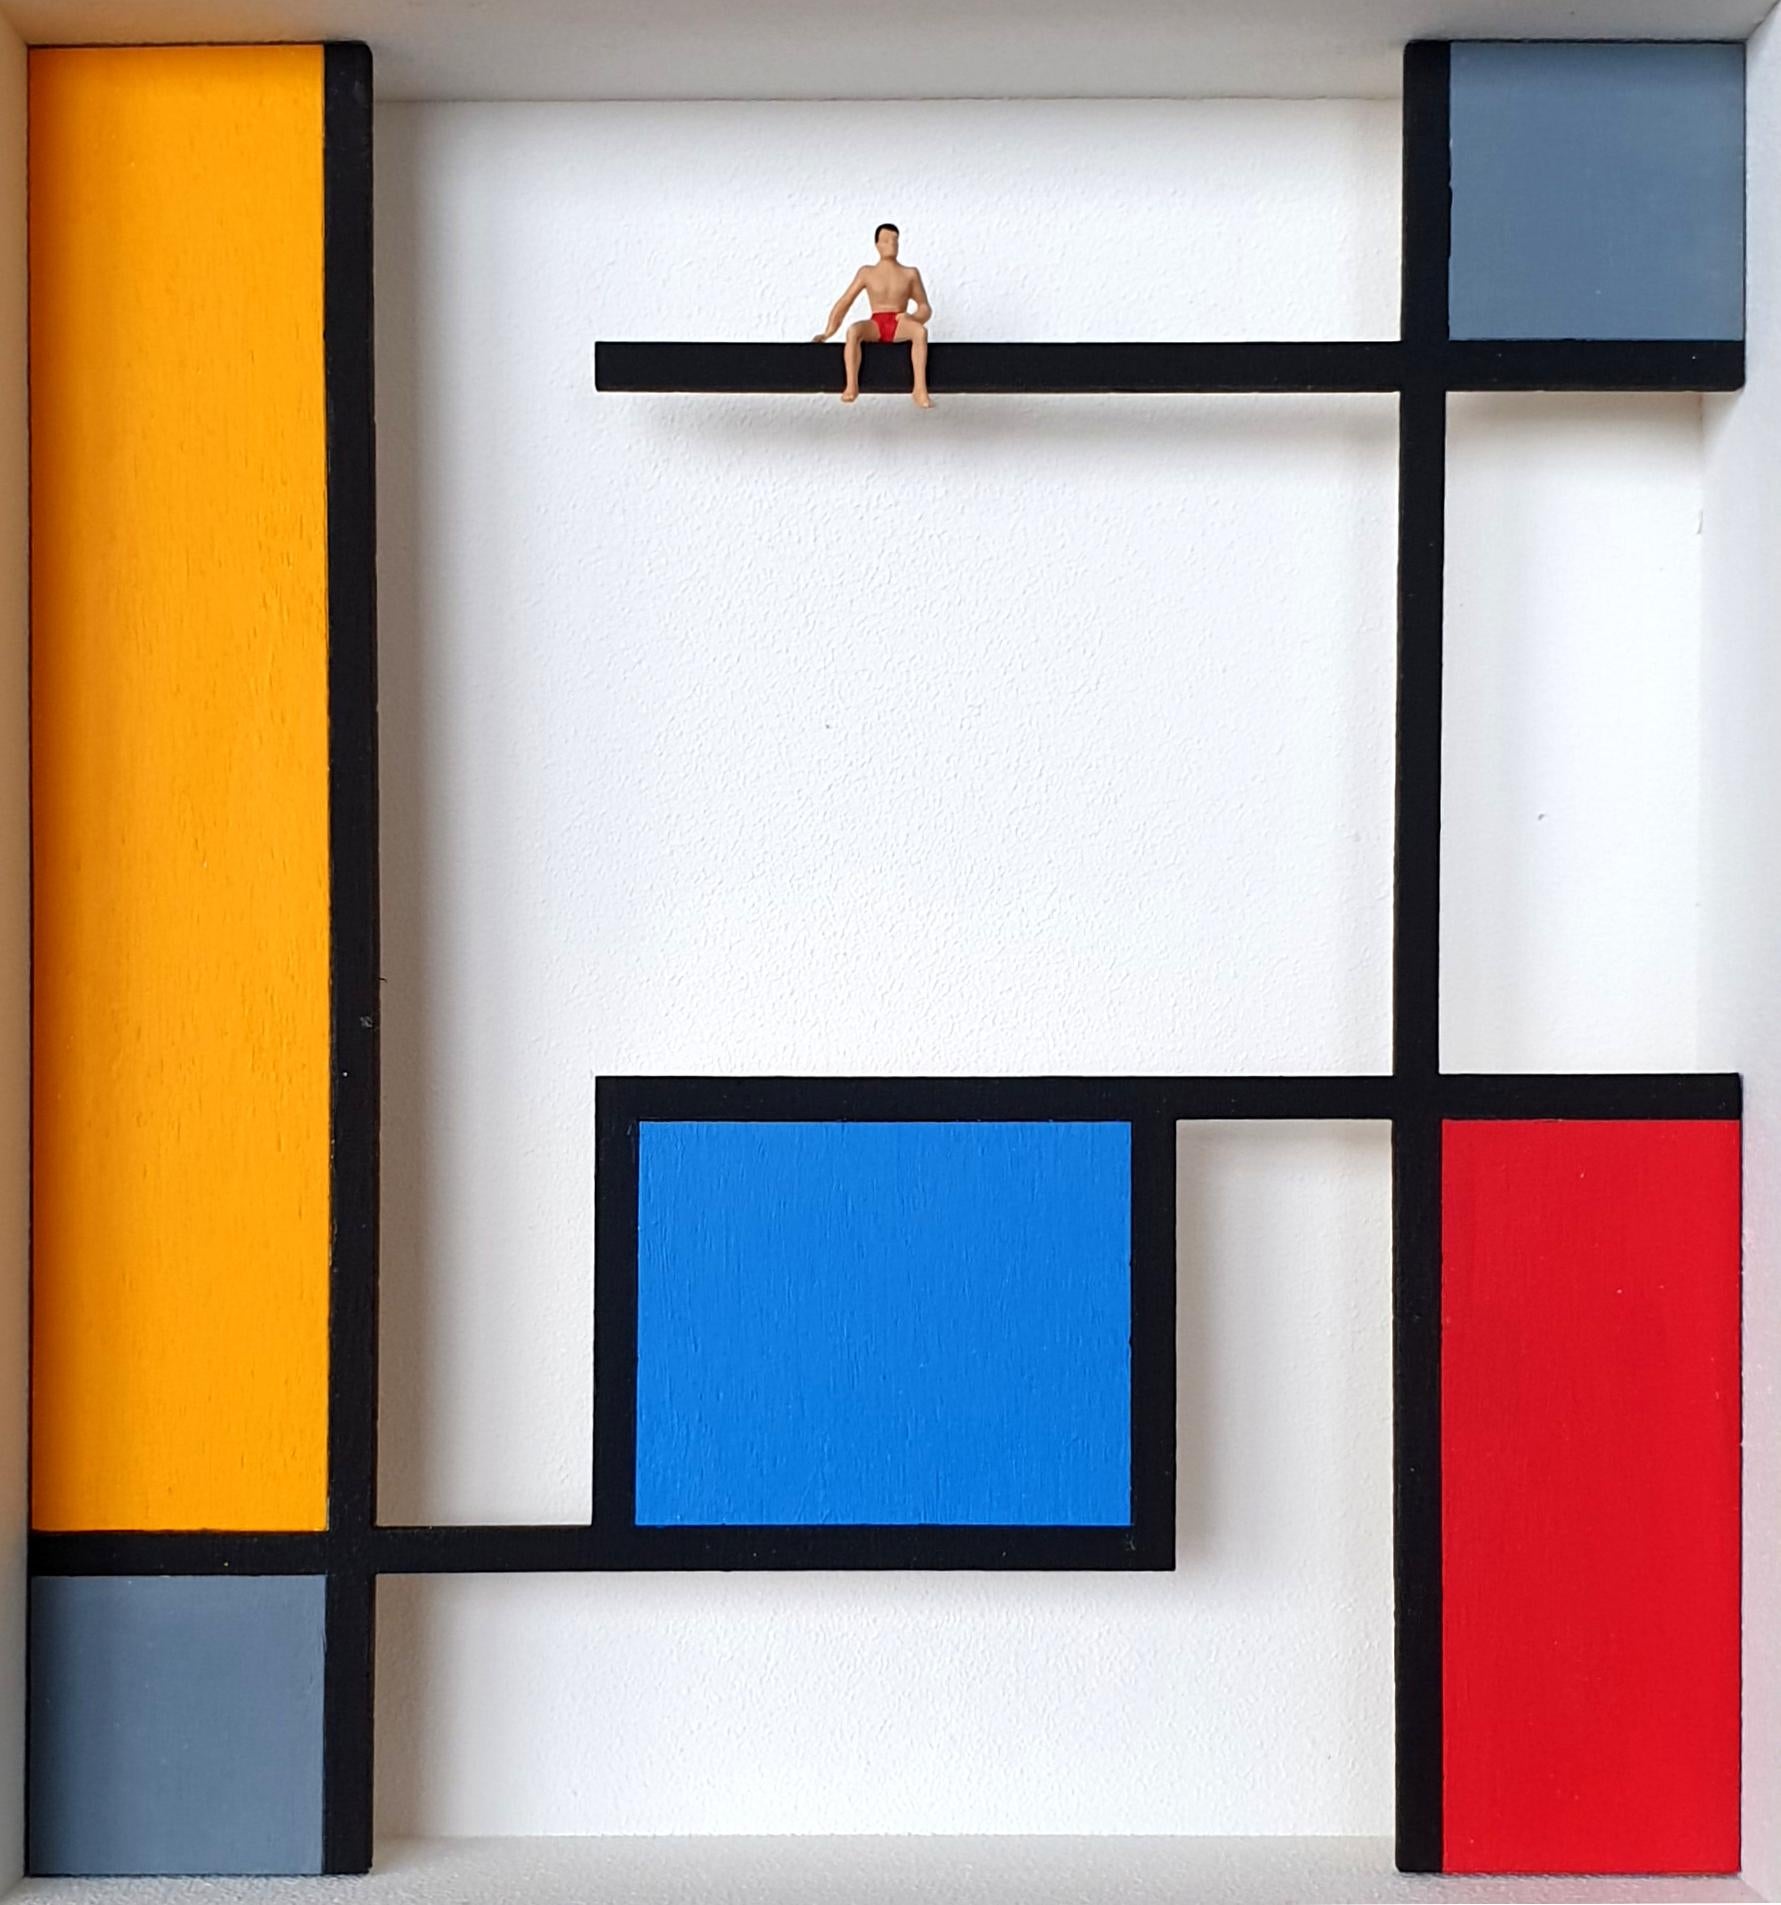 Homage to Mondrian -The Pool- contemporary art work, design tribute Dutch master